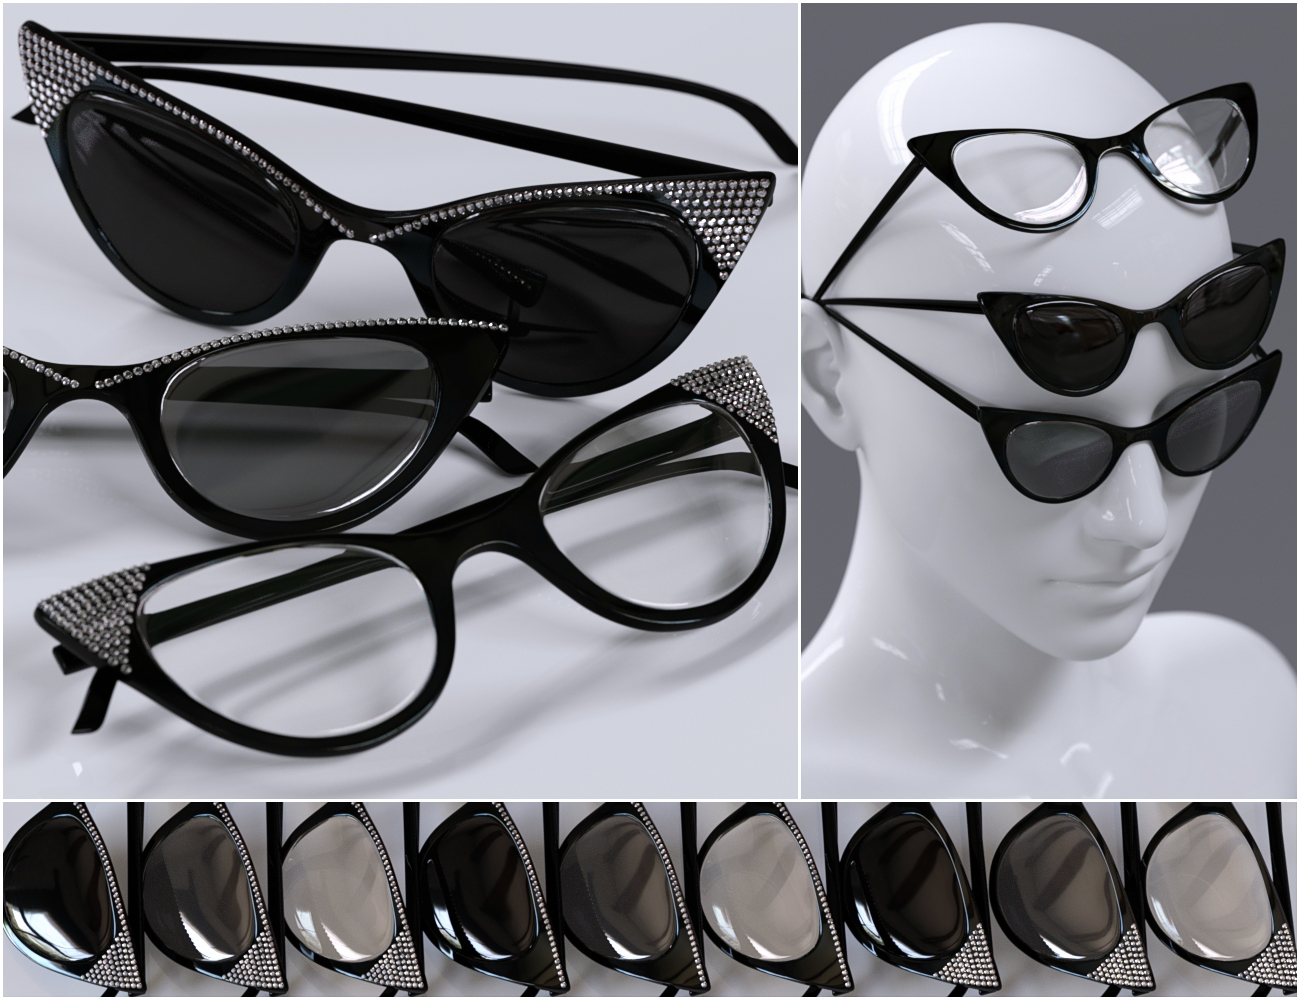 VRV Raine Glasses by: VRVirtuososTooth Fairy, 3D Models by Daz 3D